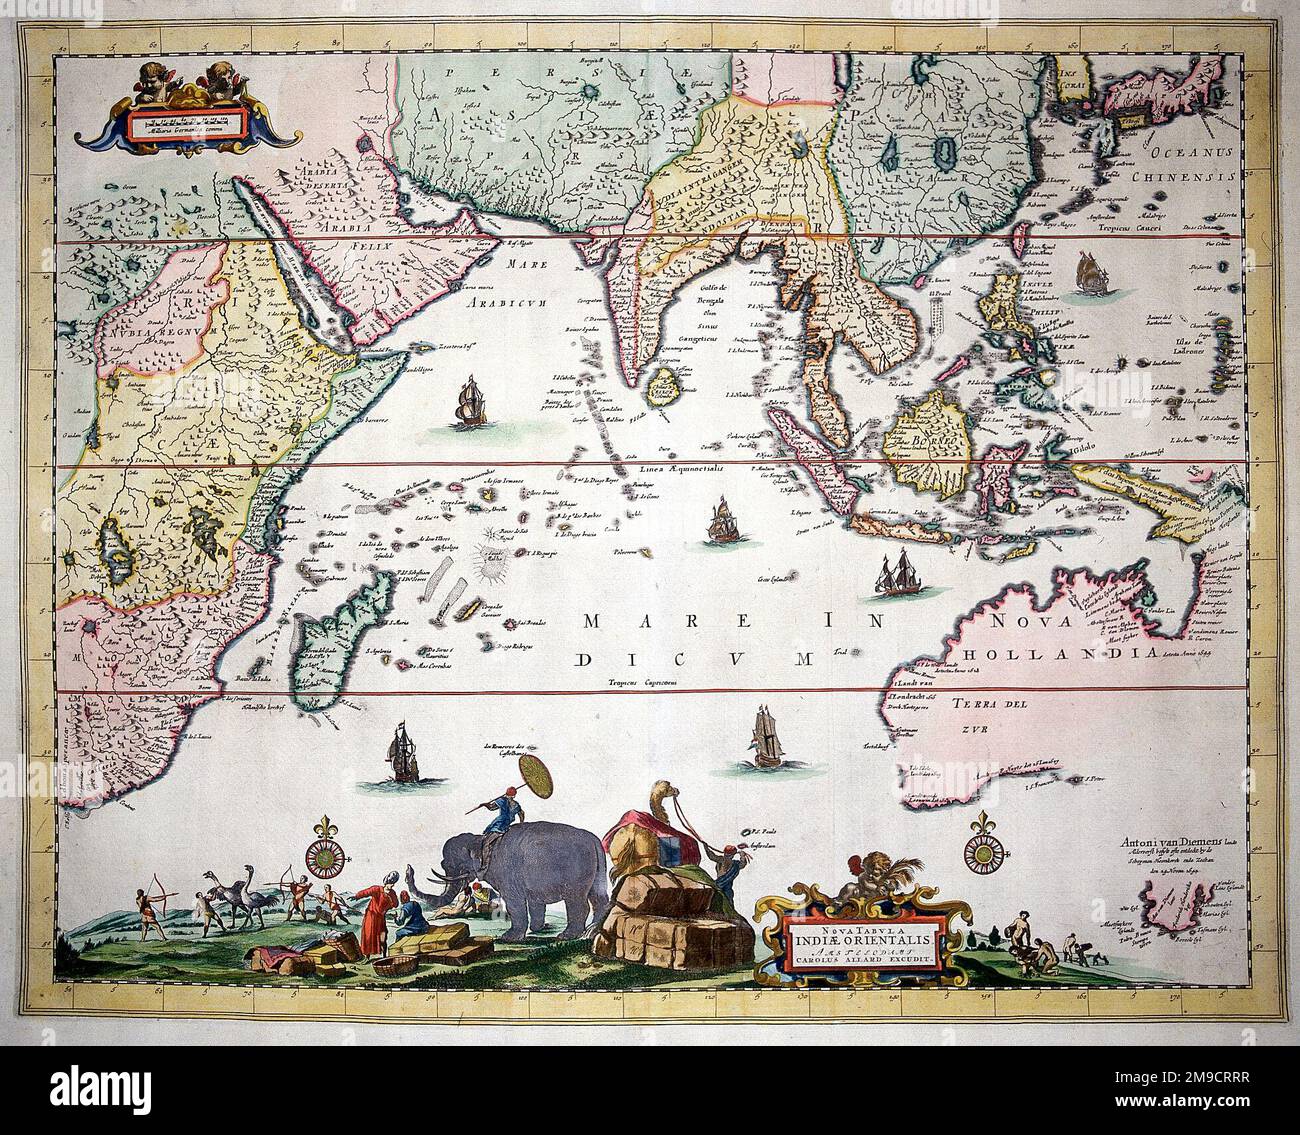 Nova Tabula Indiae orientalis carte des Indes orientales 1700 Banque D'Images